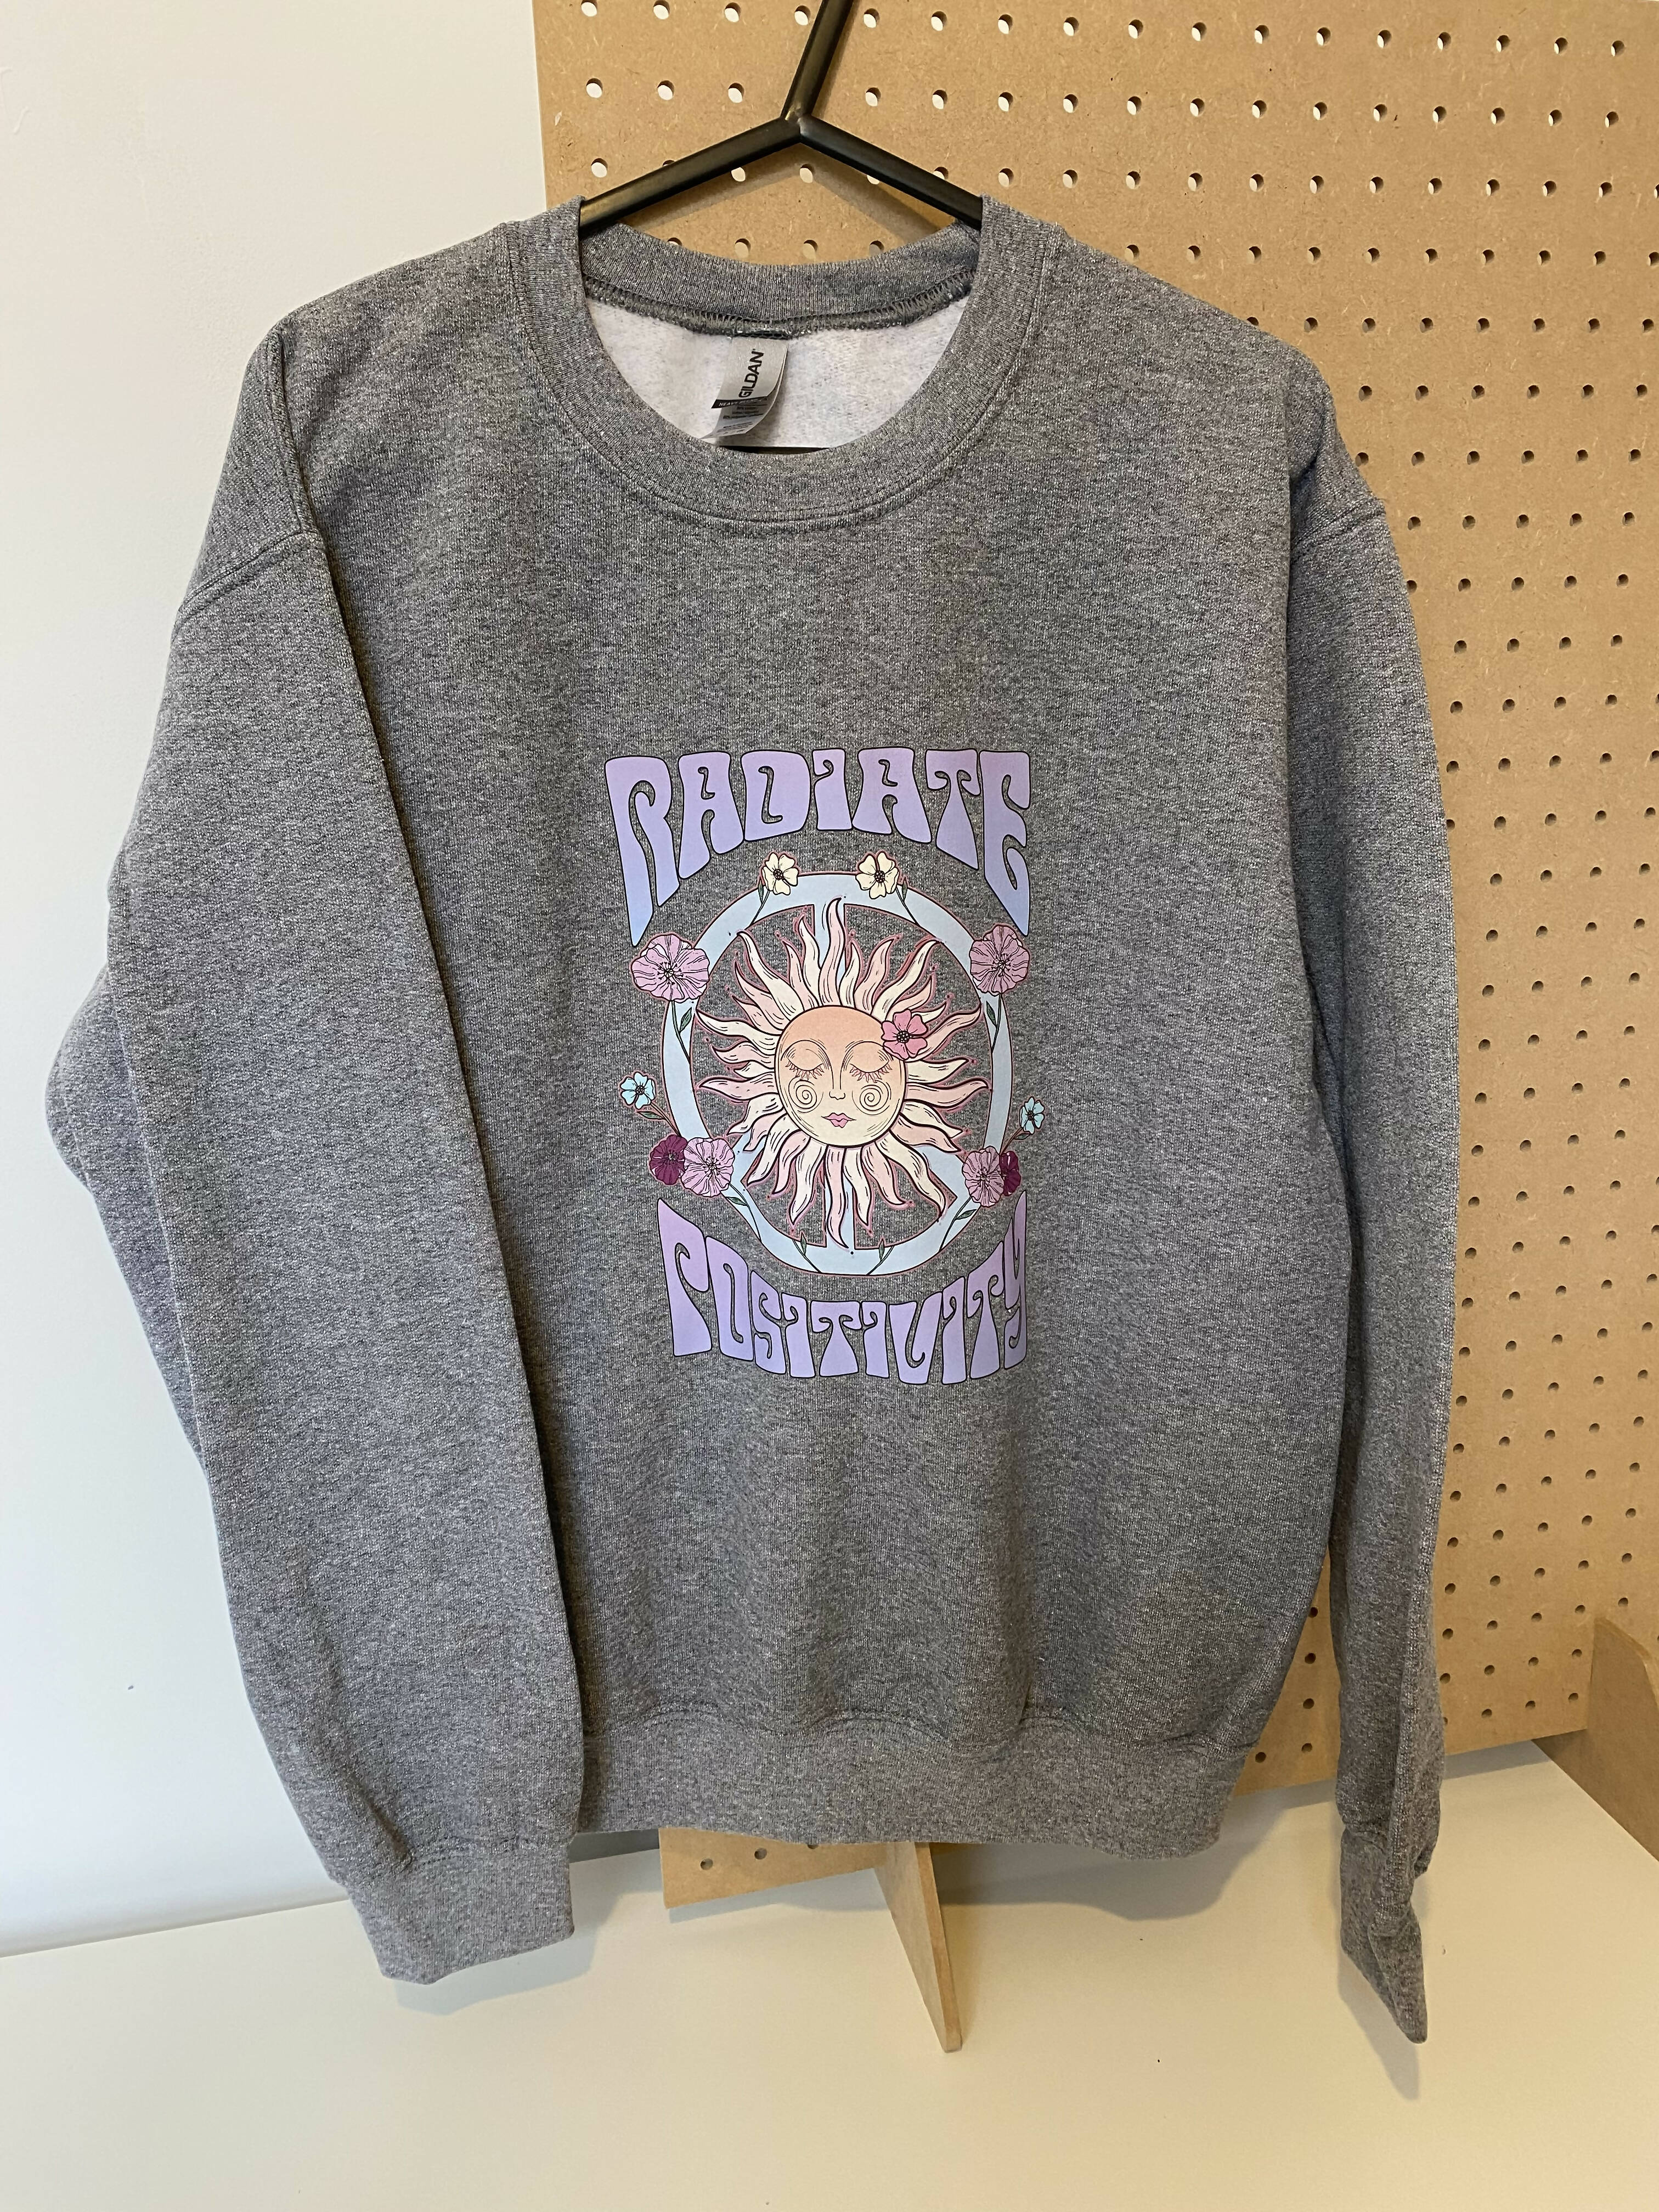 Radiate positivity grey sweatshirt